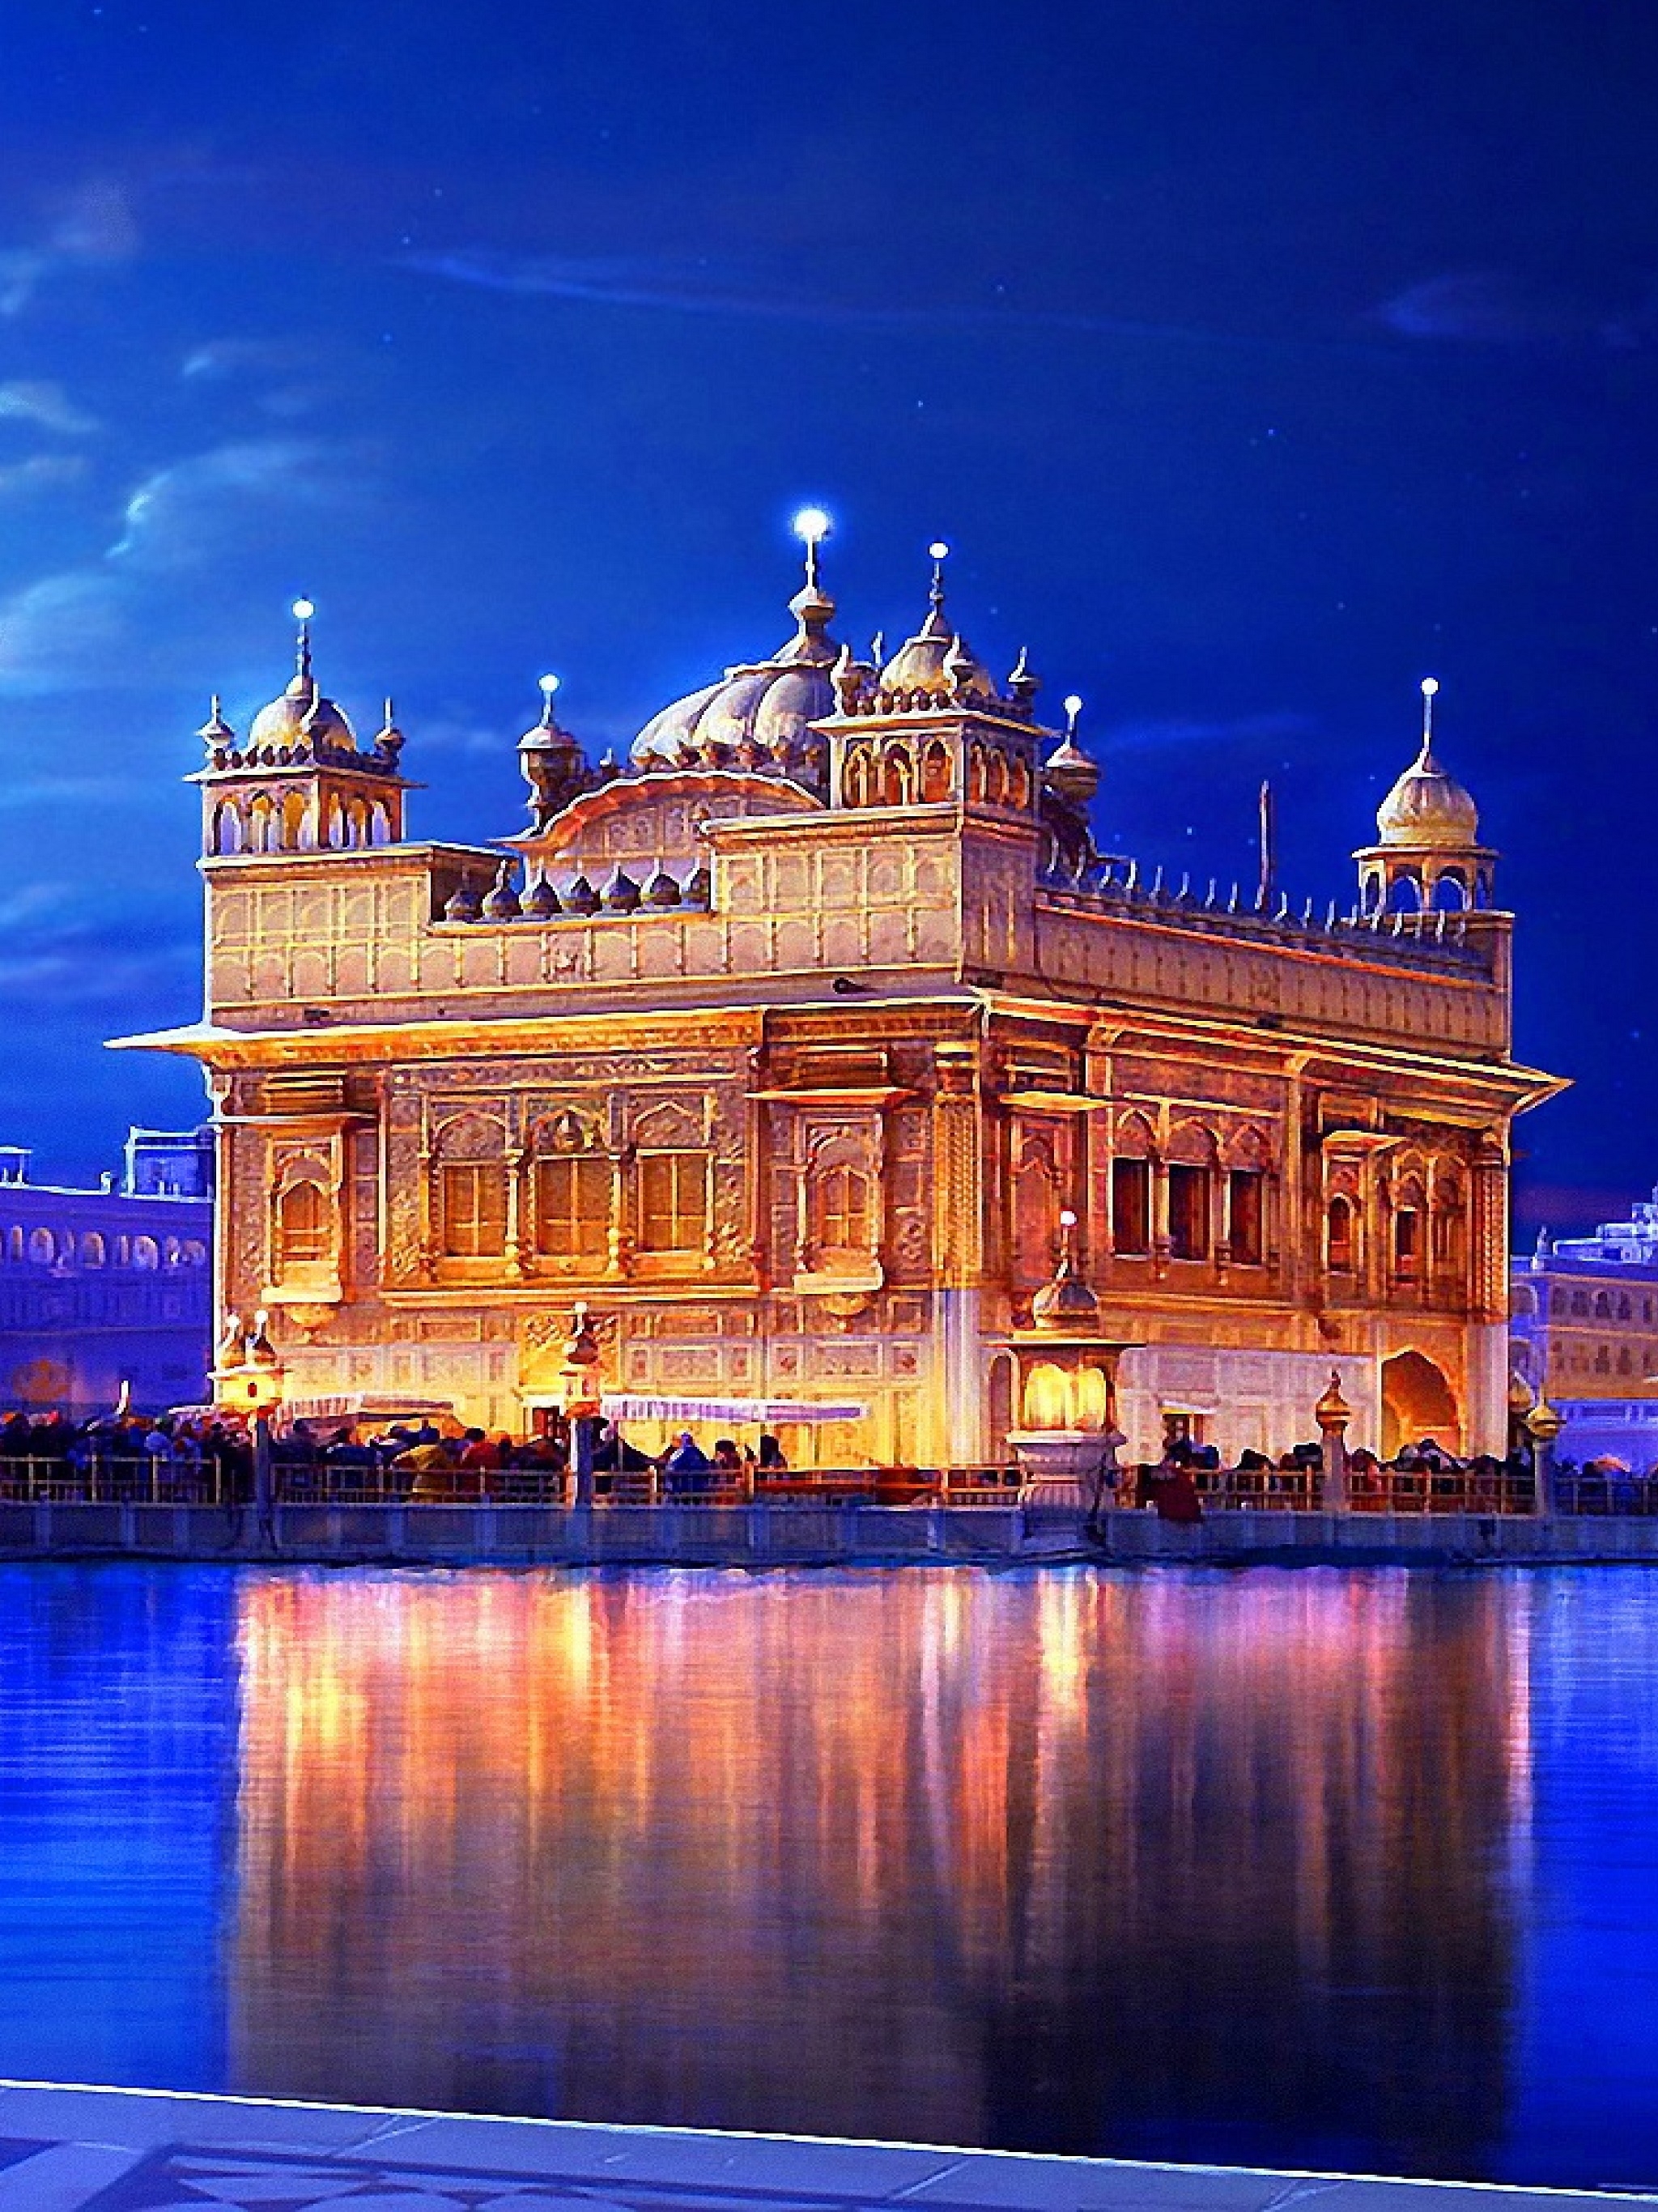 Golden Temple Amritsar India for Apple iPad Pro resolution